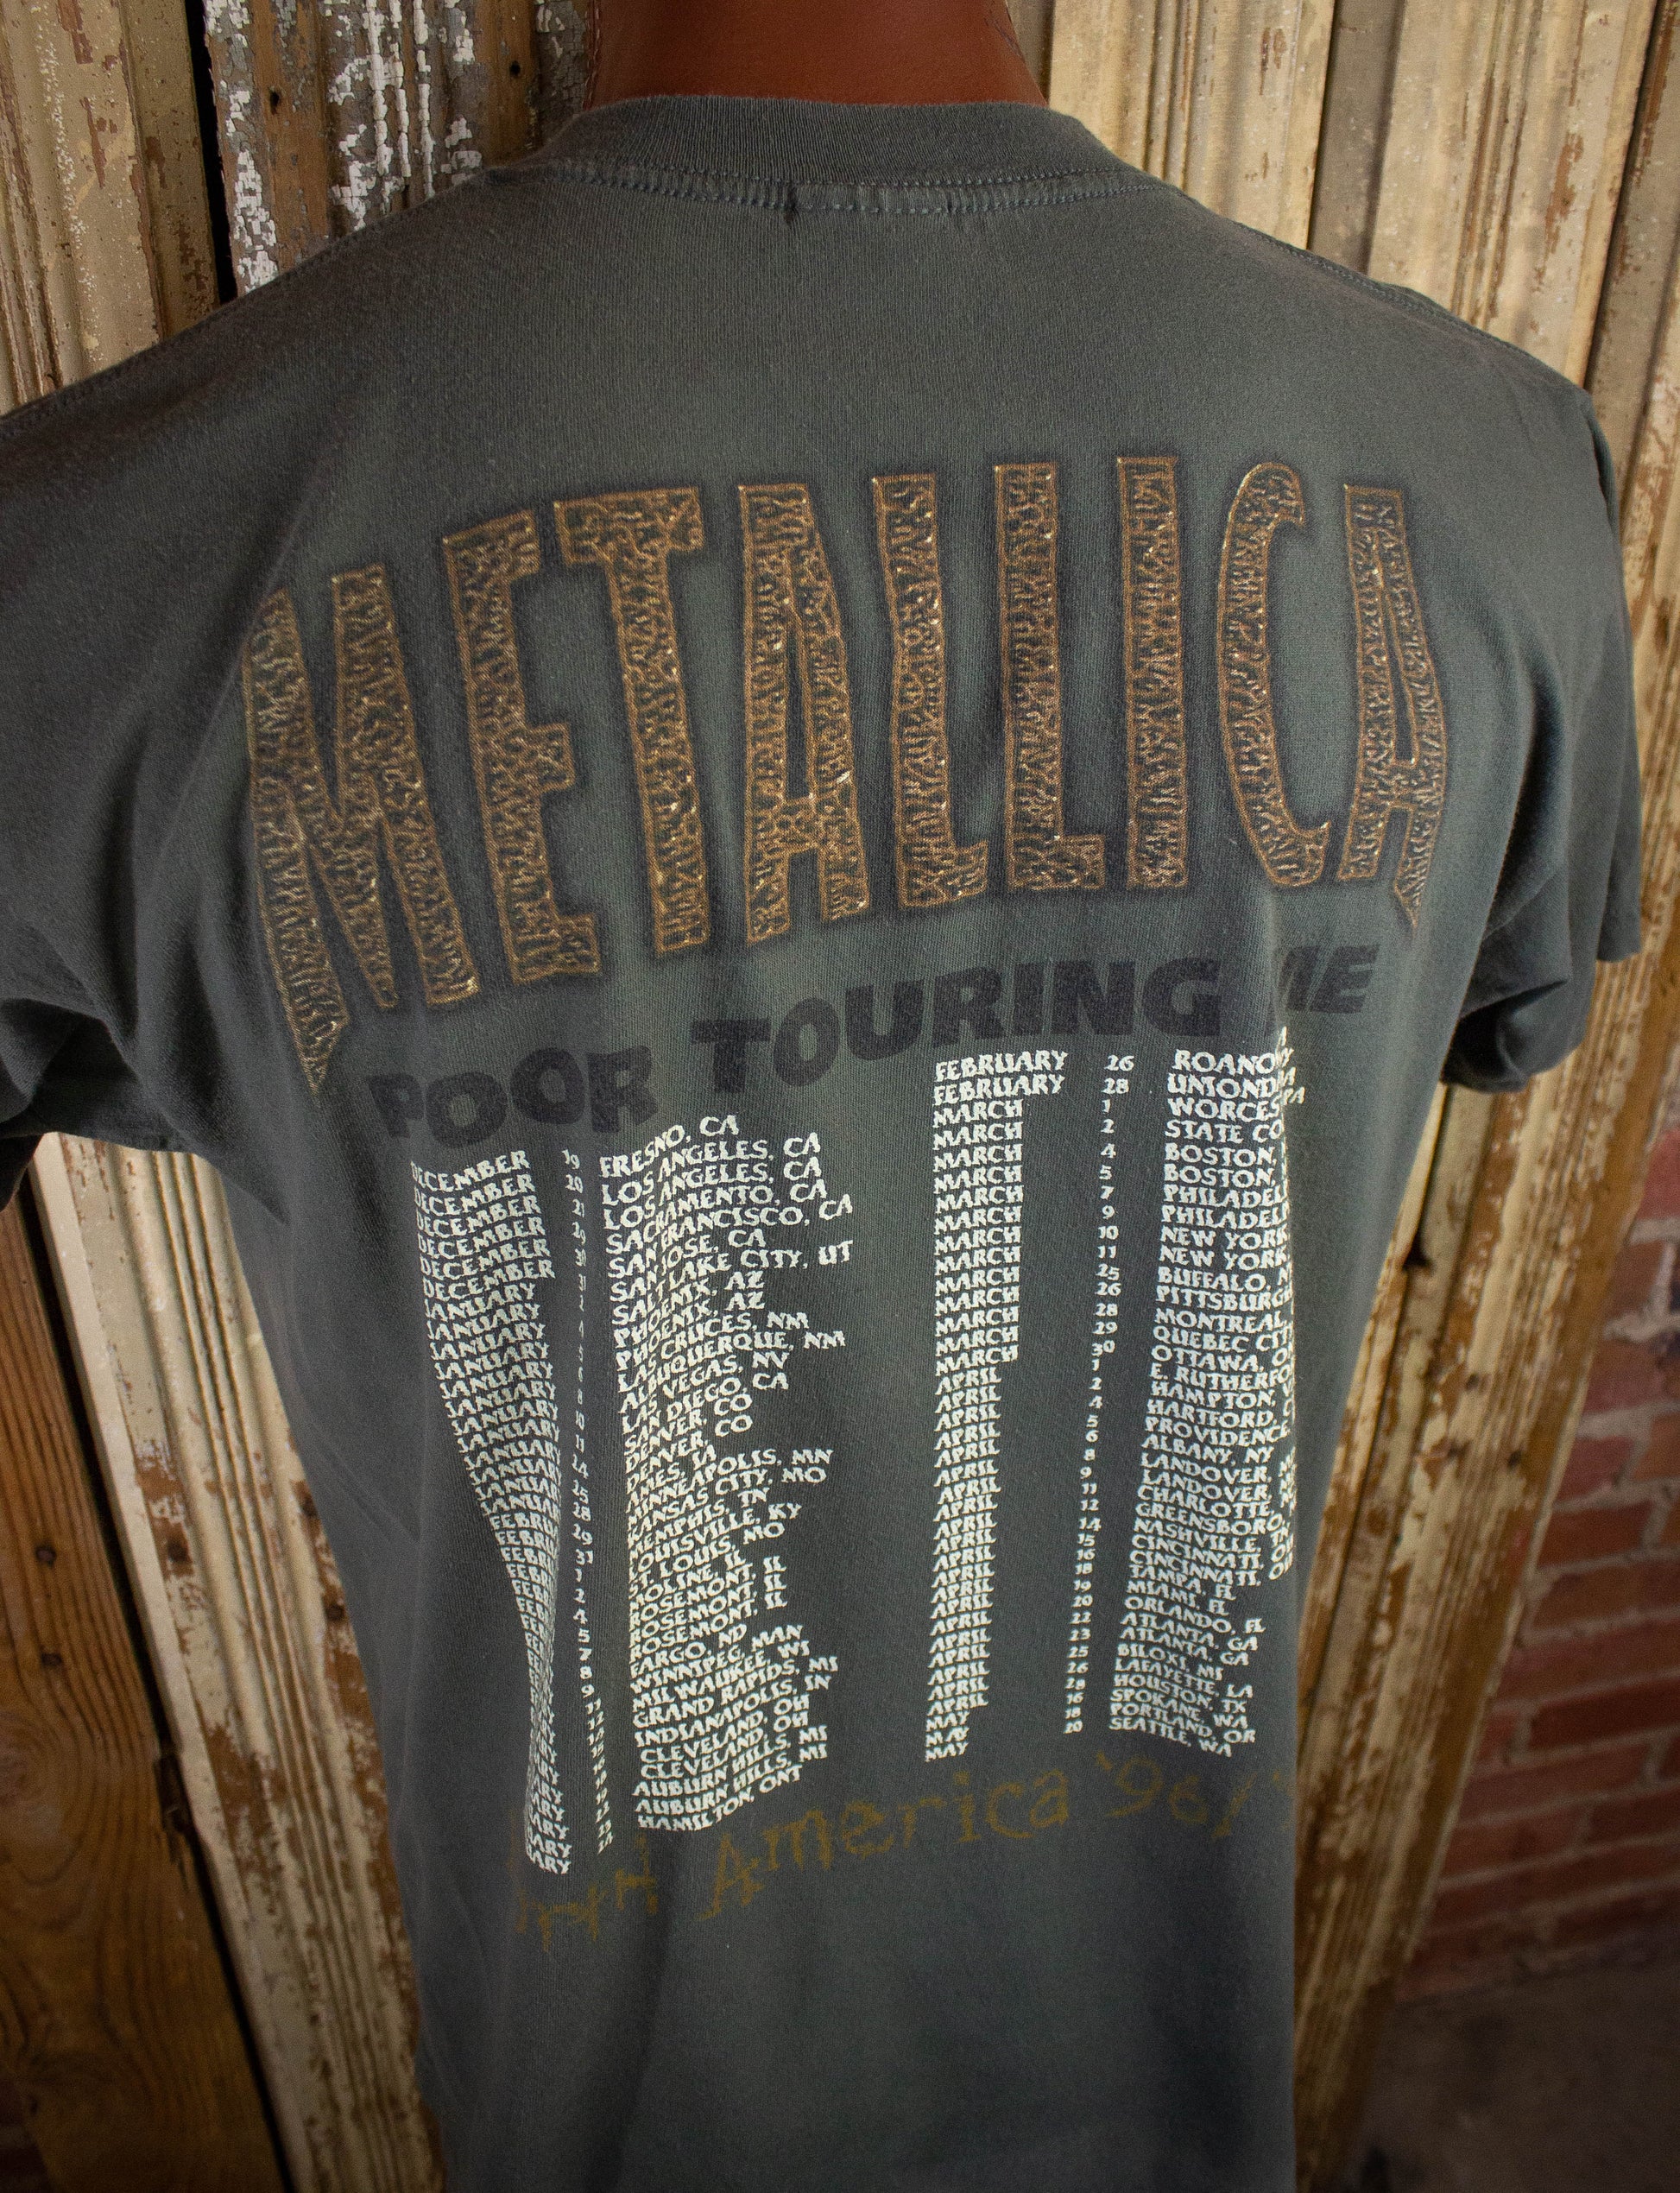 Vintage Metallica Poor Touring Me Concert T Shirt 1996-97 Olive Green XL